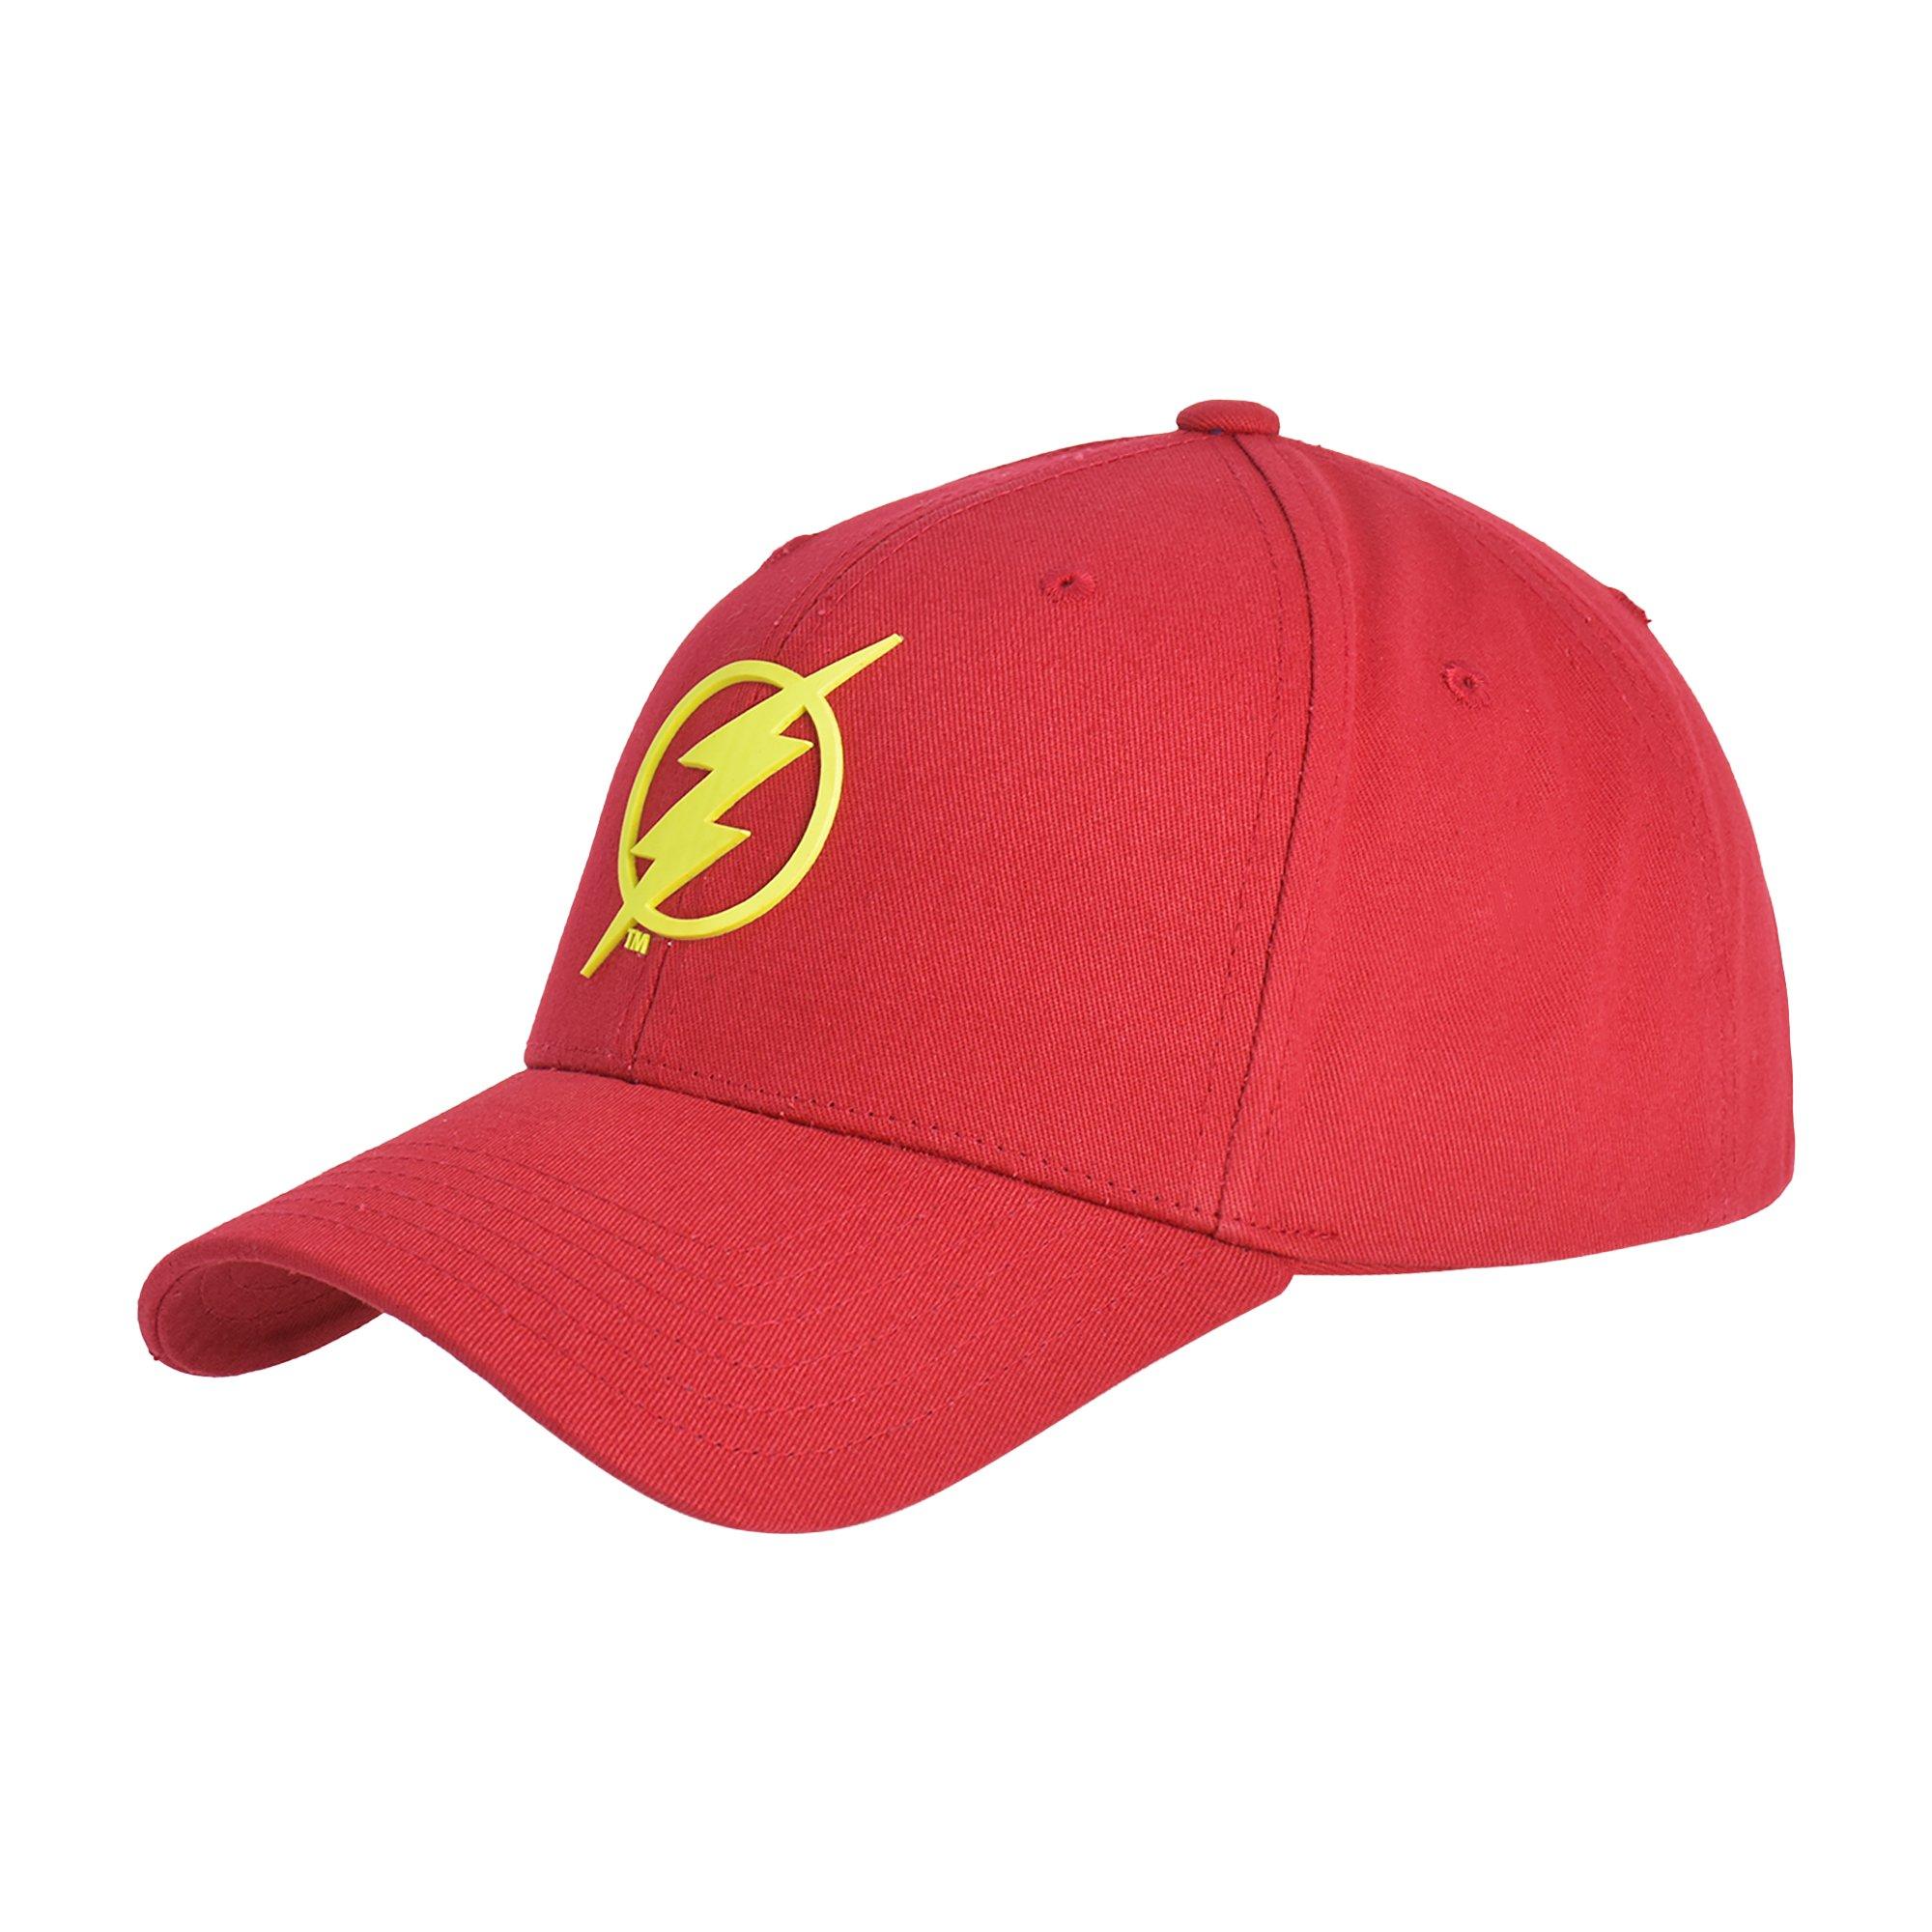 The 3D GameStop Unisex Flash Adjustable Logo Movie Rubber Hat |